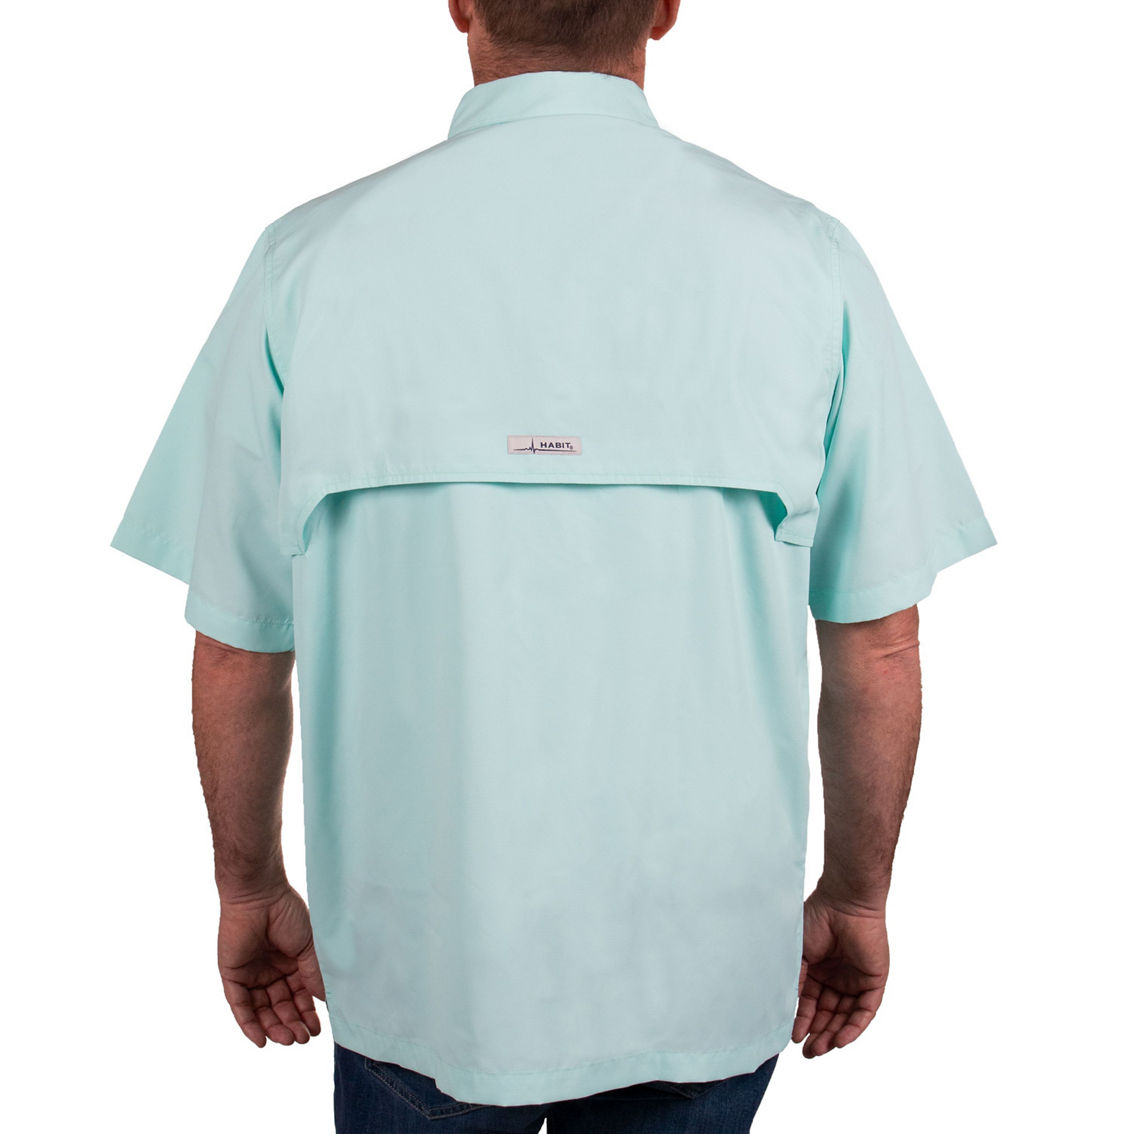 Habit Button Up Shirt Mens Blue Short Sleeve Fishing Vented SIZE MEDIUM 